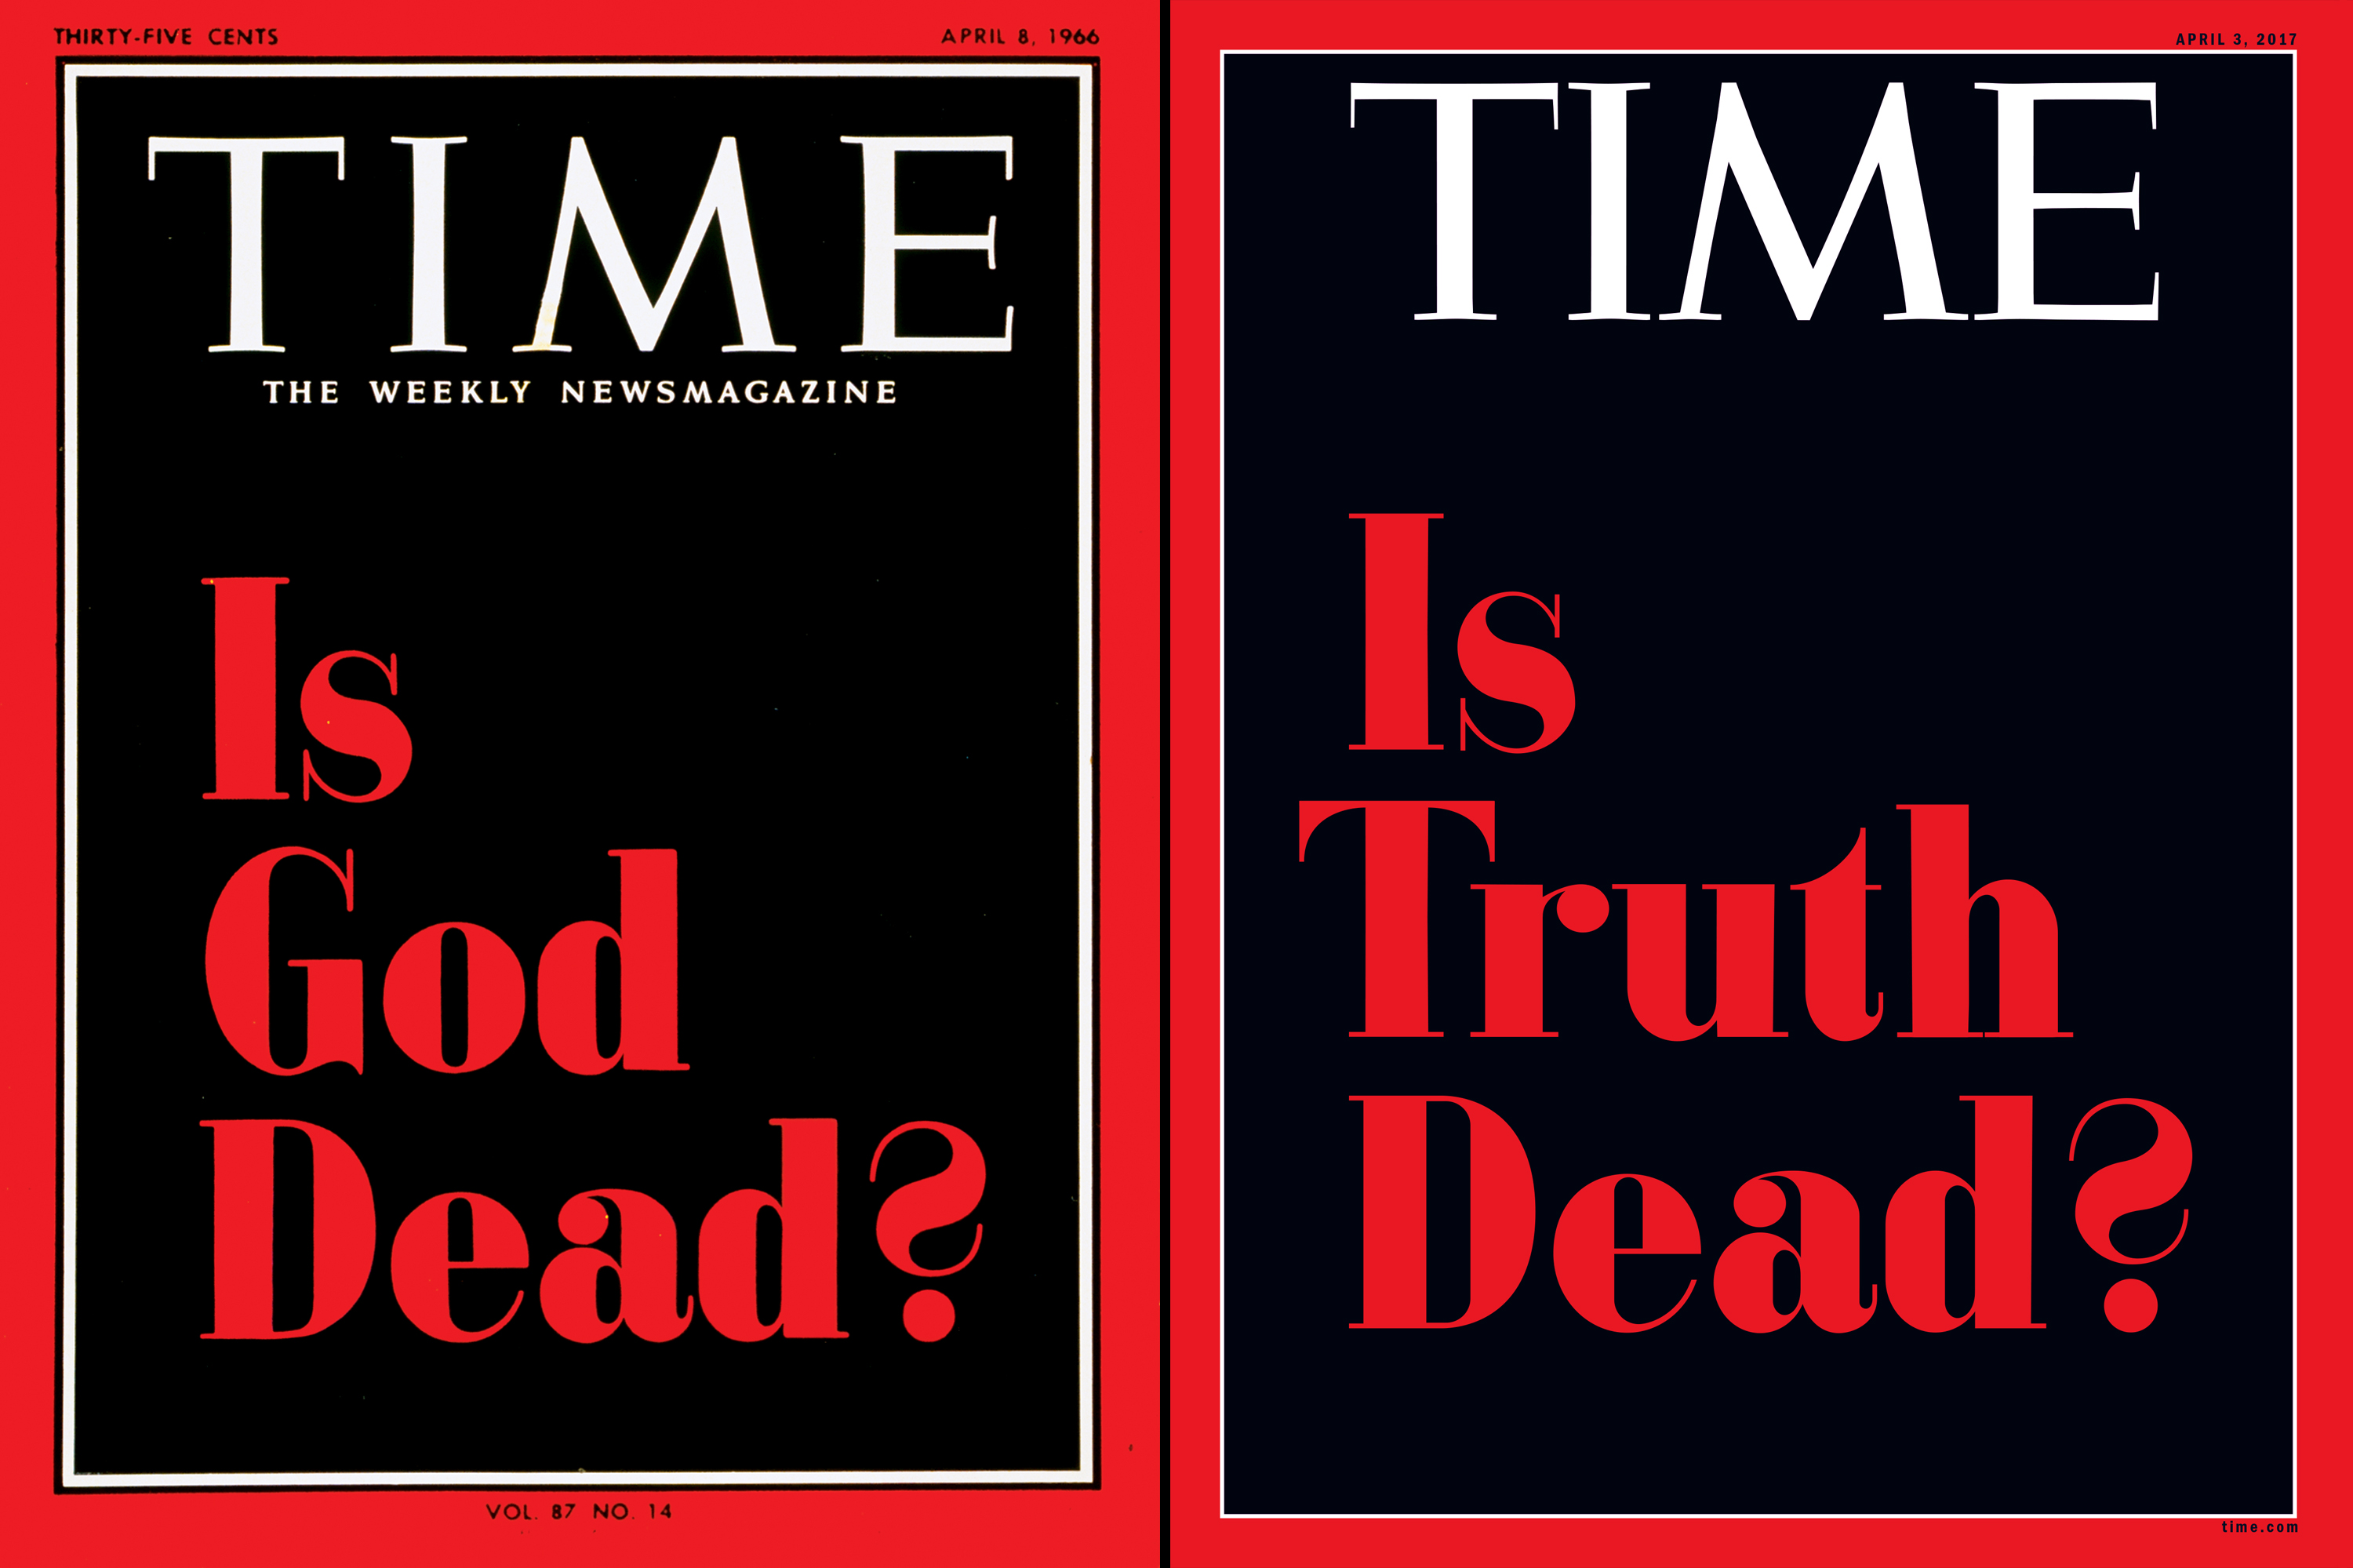 "Is God Dead?," April 8, 1966; "Is Truth Dead?," April 3, 2017